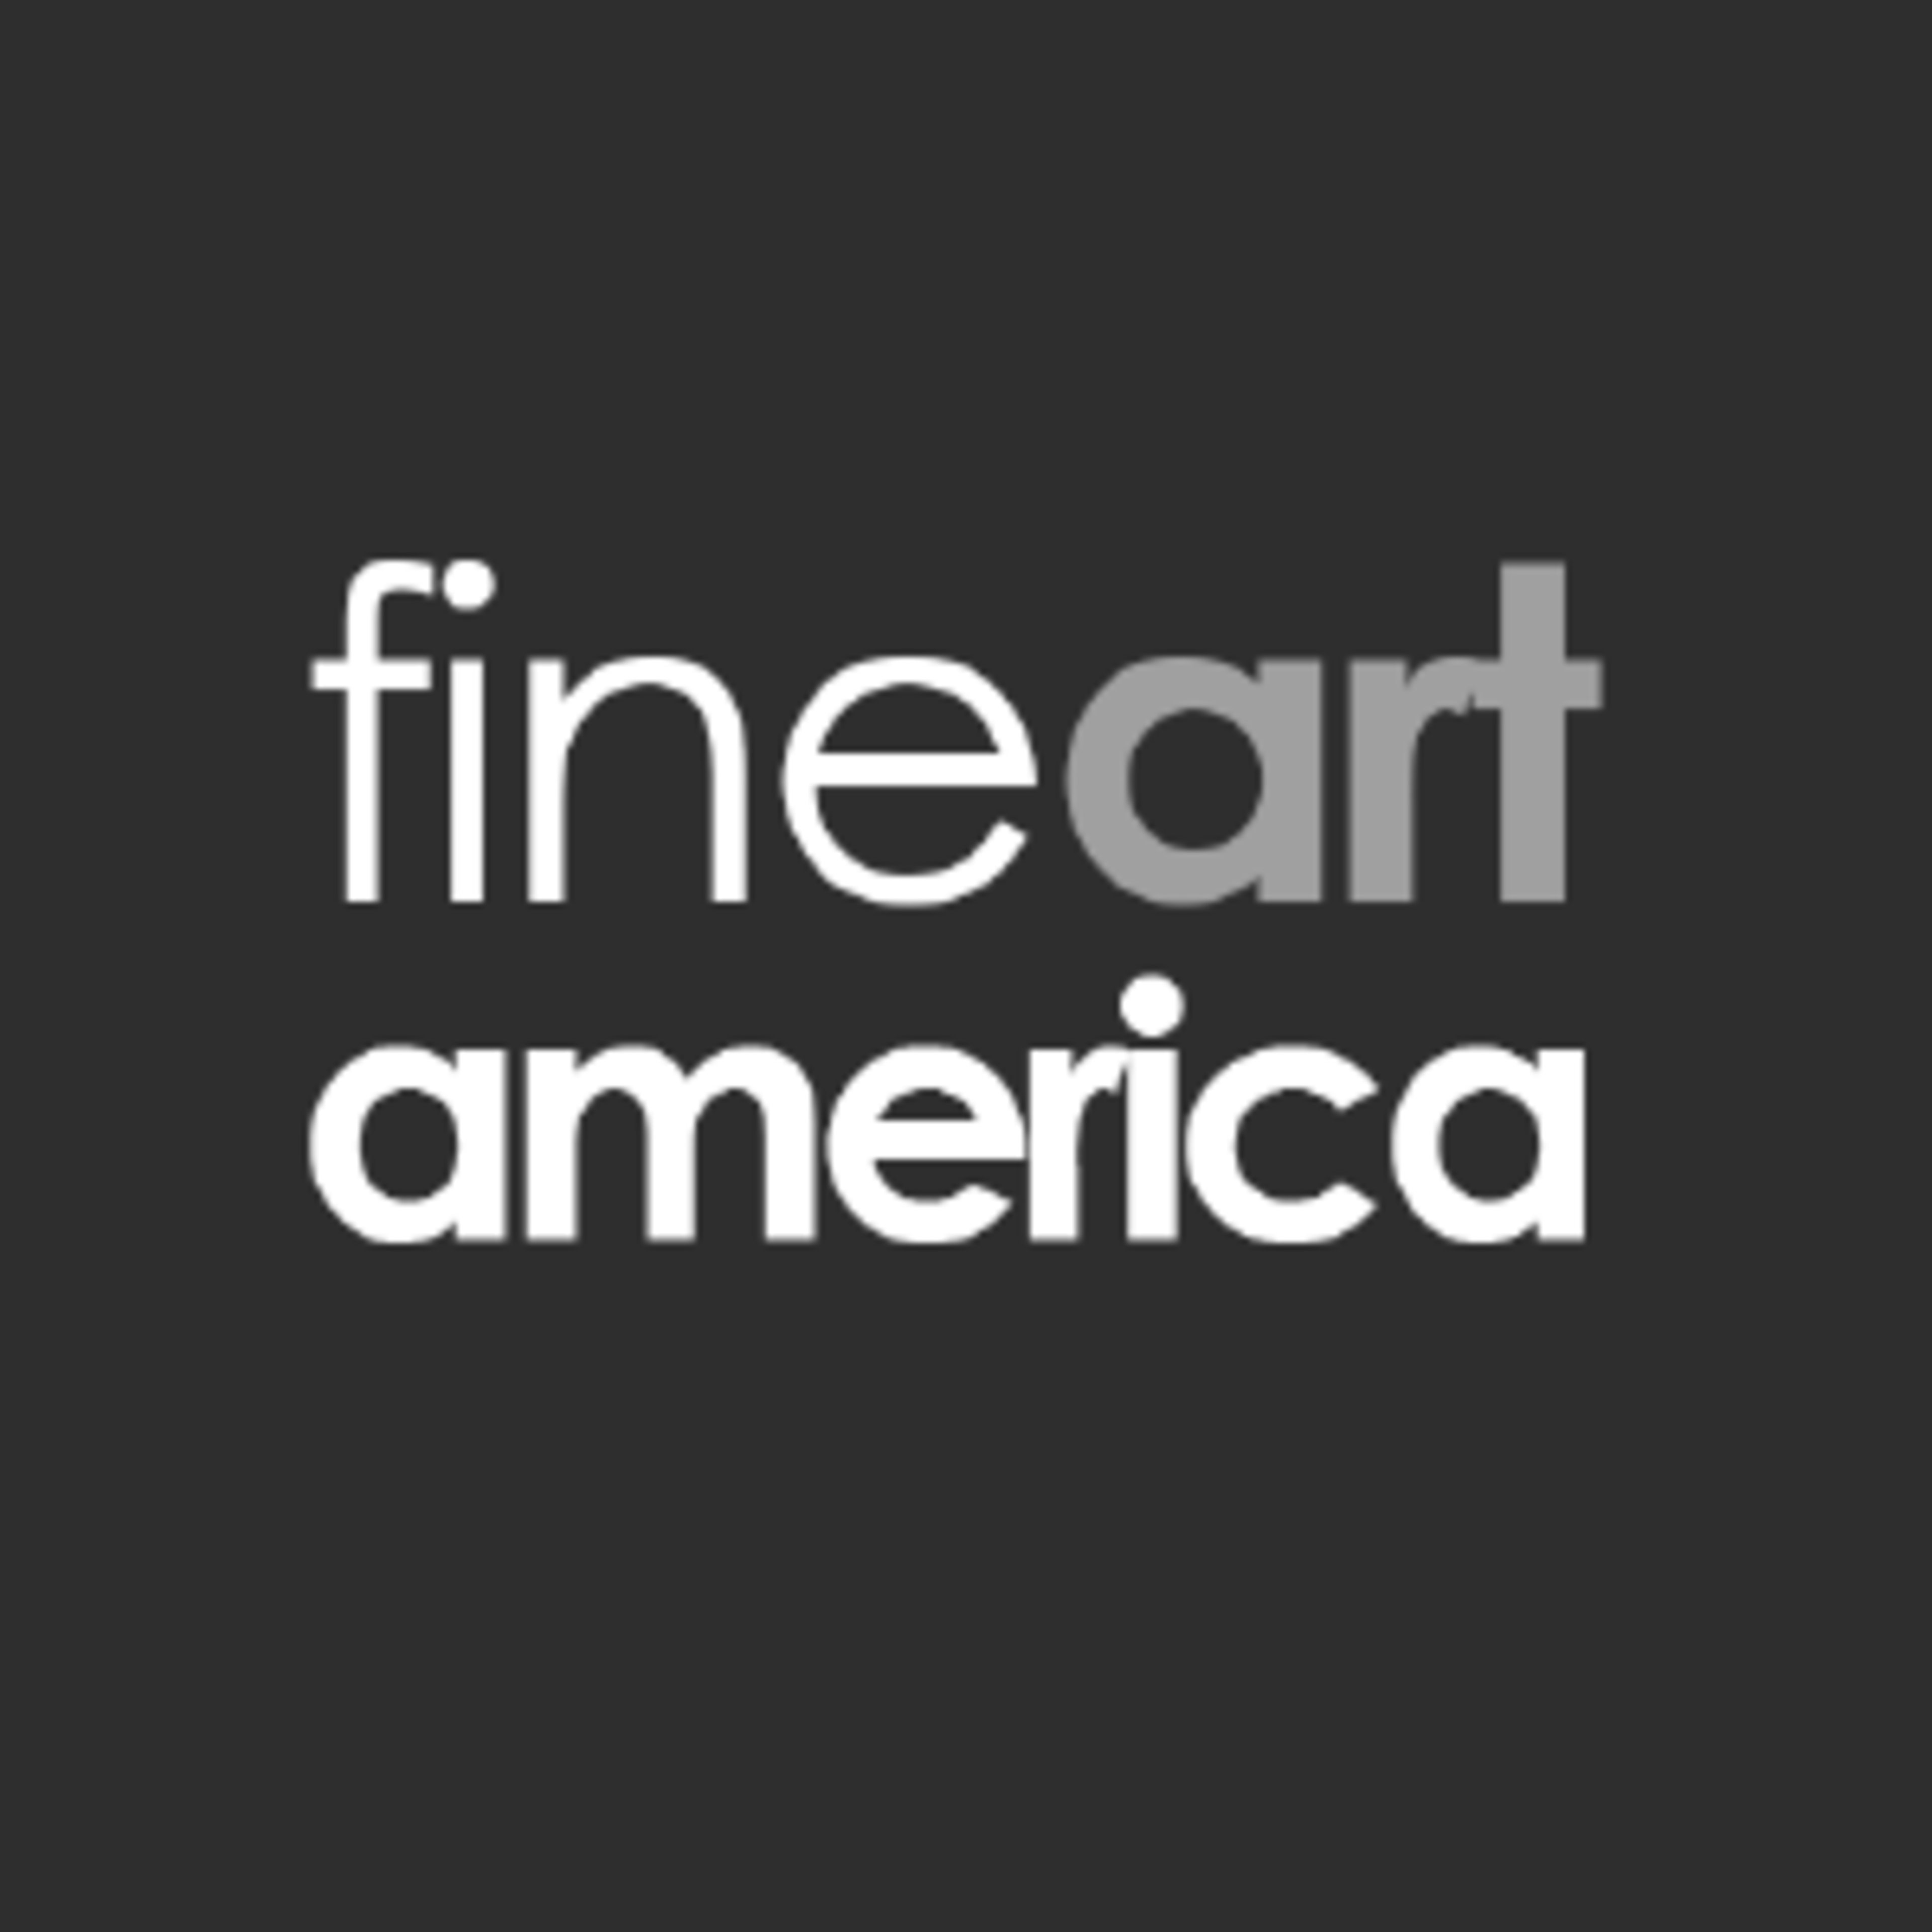 Fine Art AmericaCode